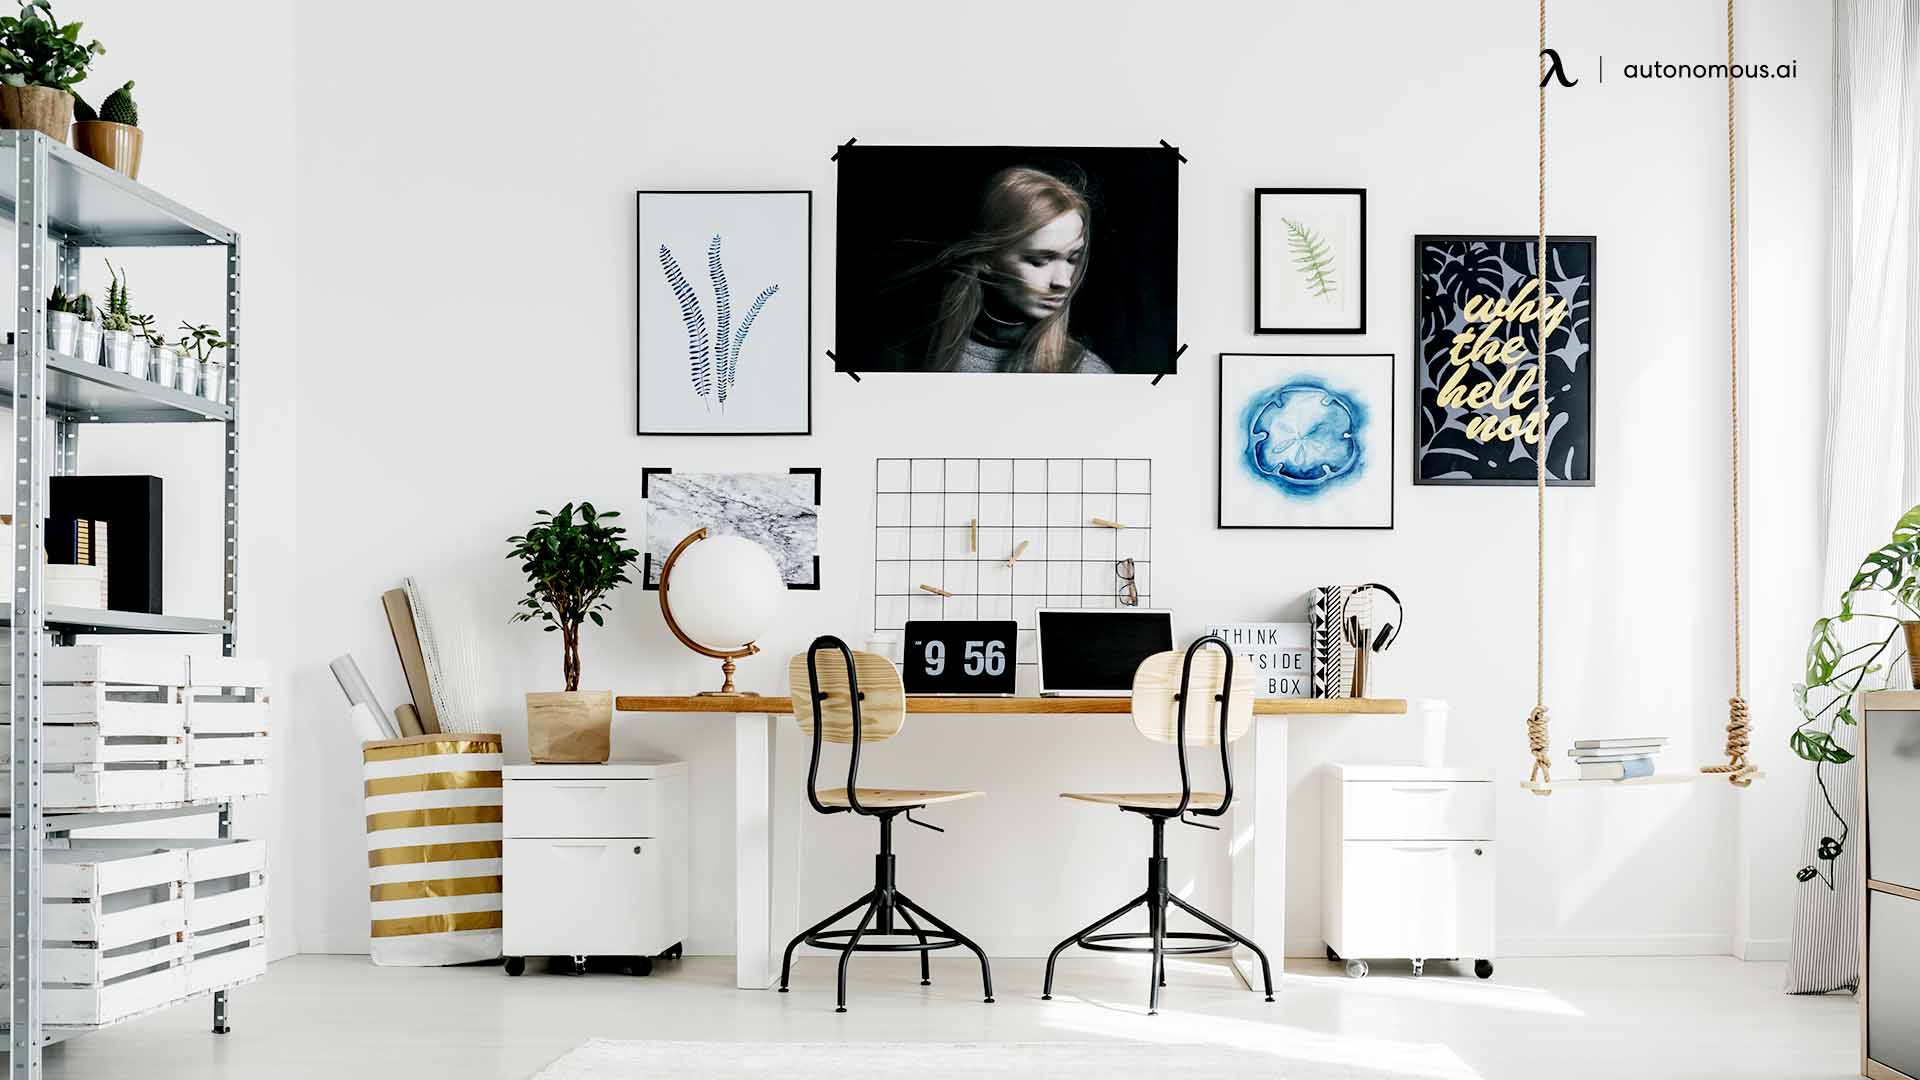 Home Office Wall Decor Idea on a Budget | Home decor, Home office  organization, Decor inspiration